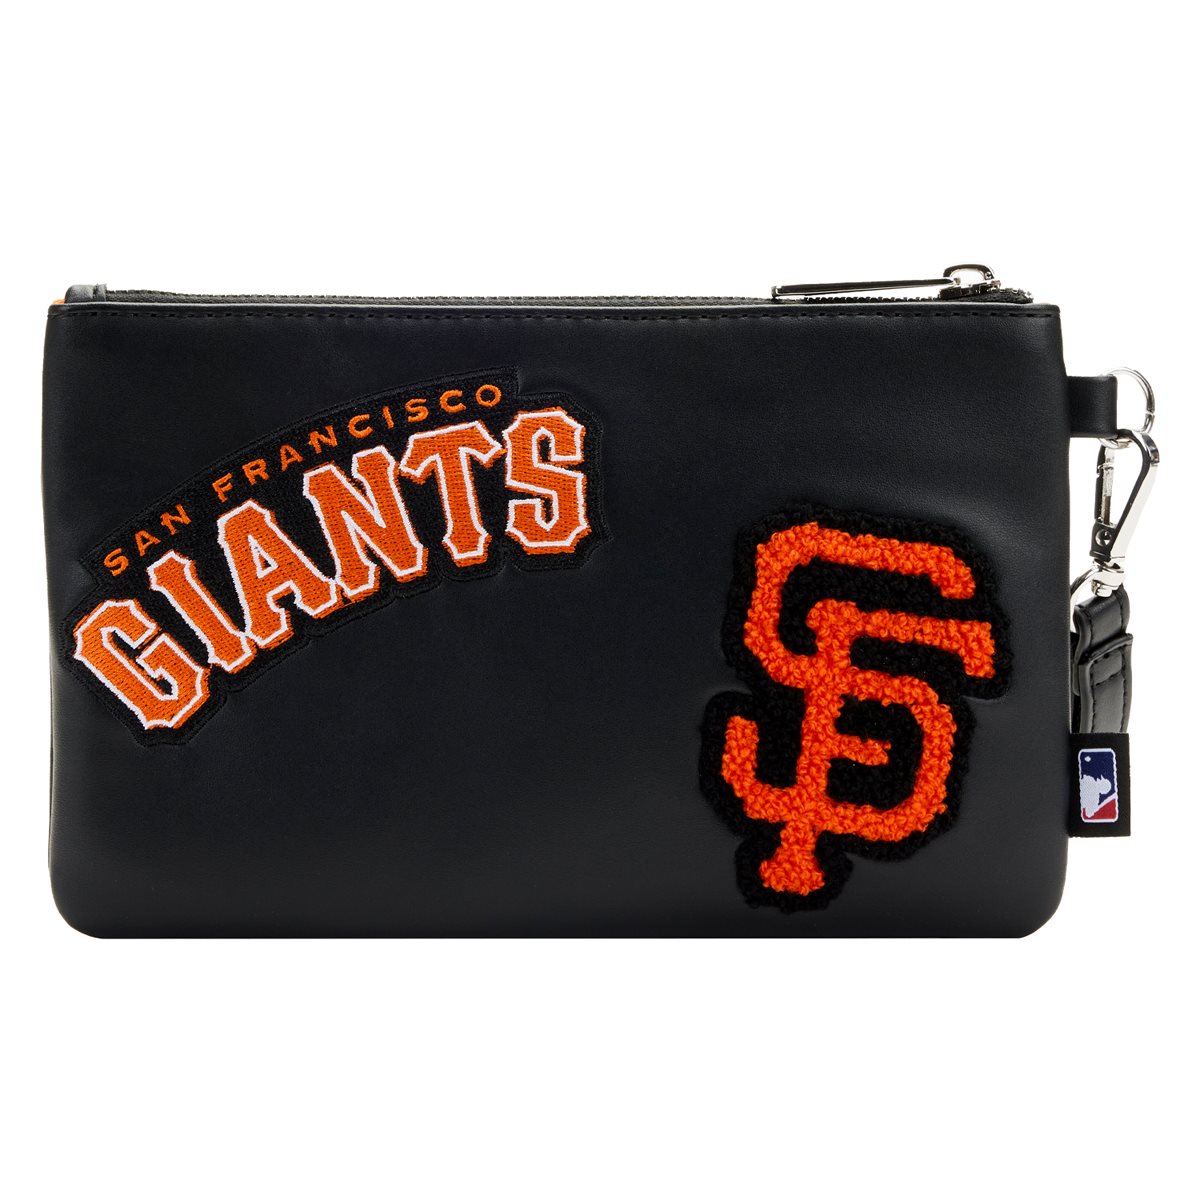 Mlb San Francisco Giants Large Gogo Gift Bag : Target